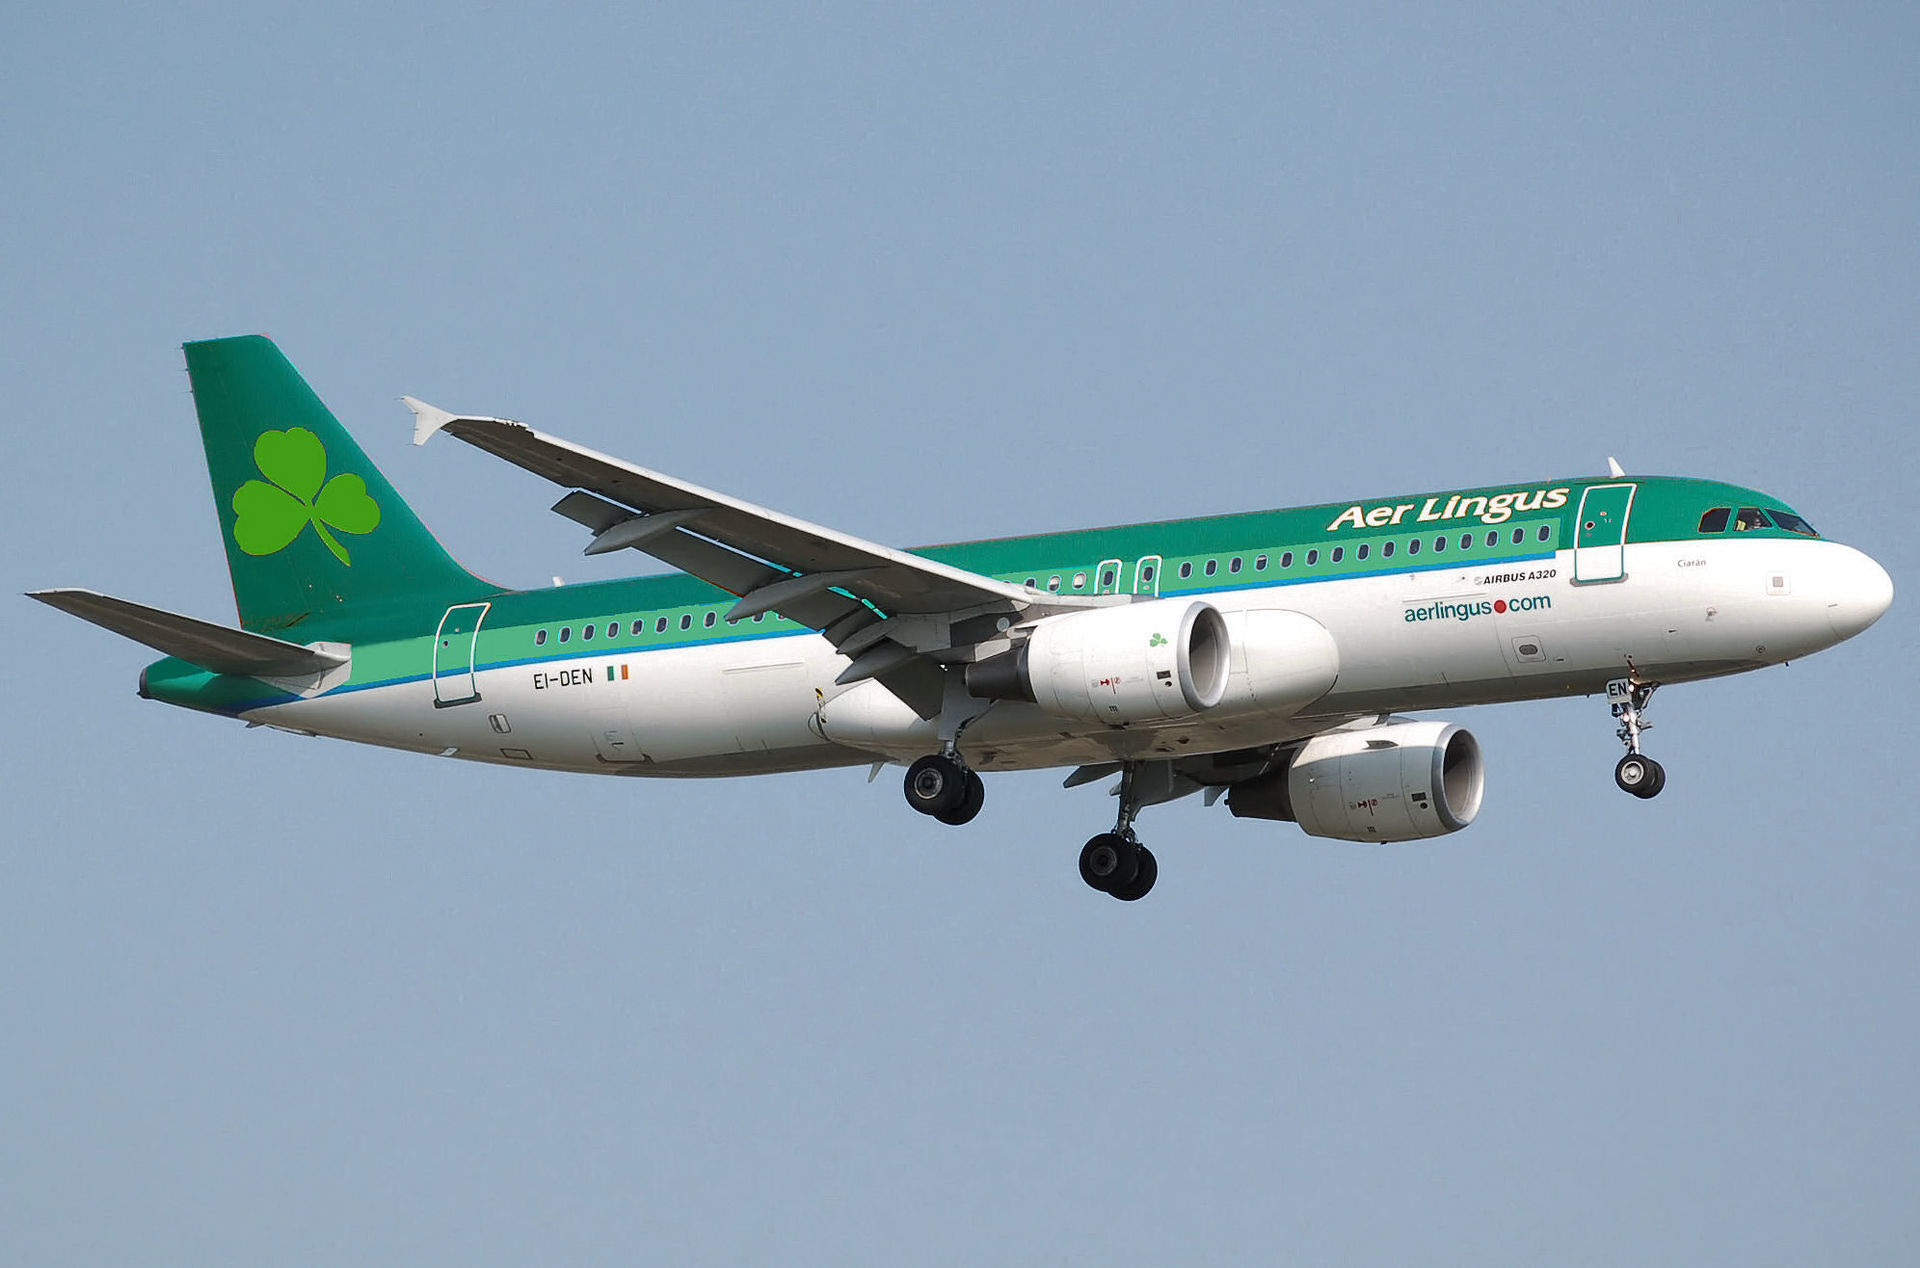 Aer Lingus va adopter les points Avios